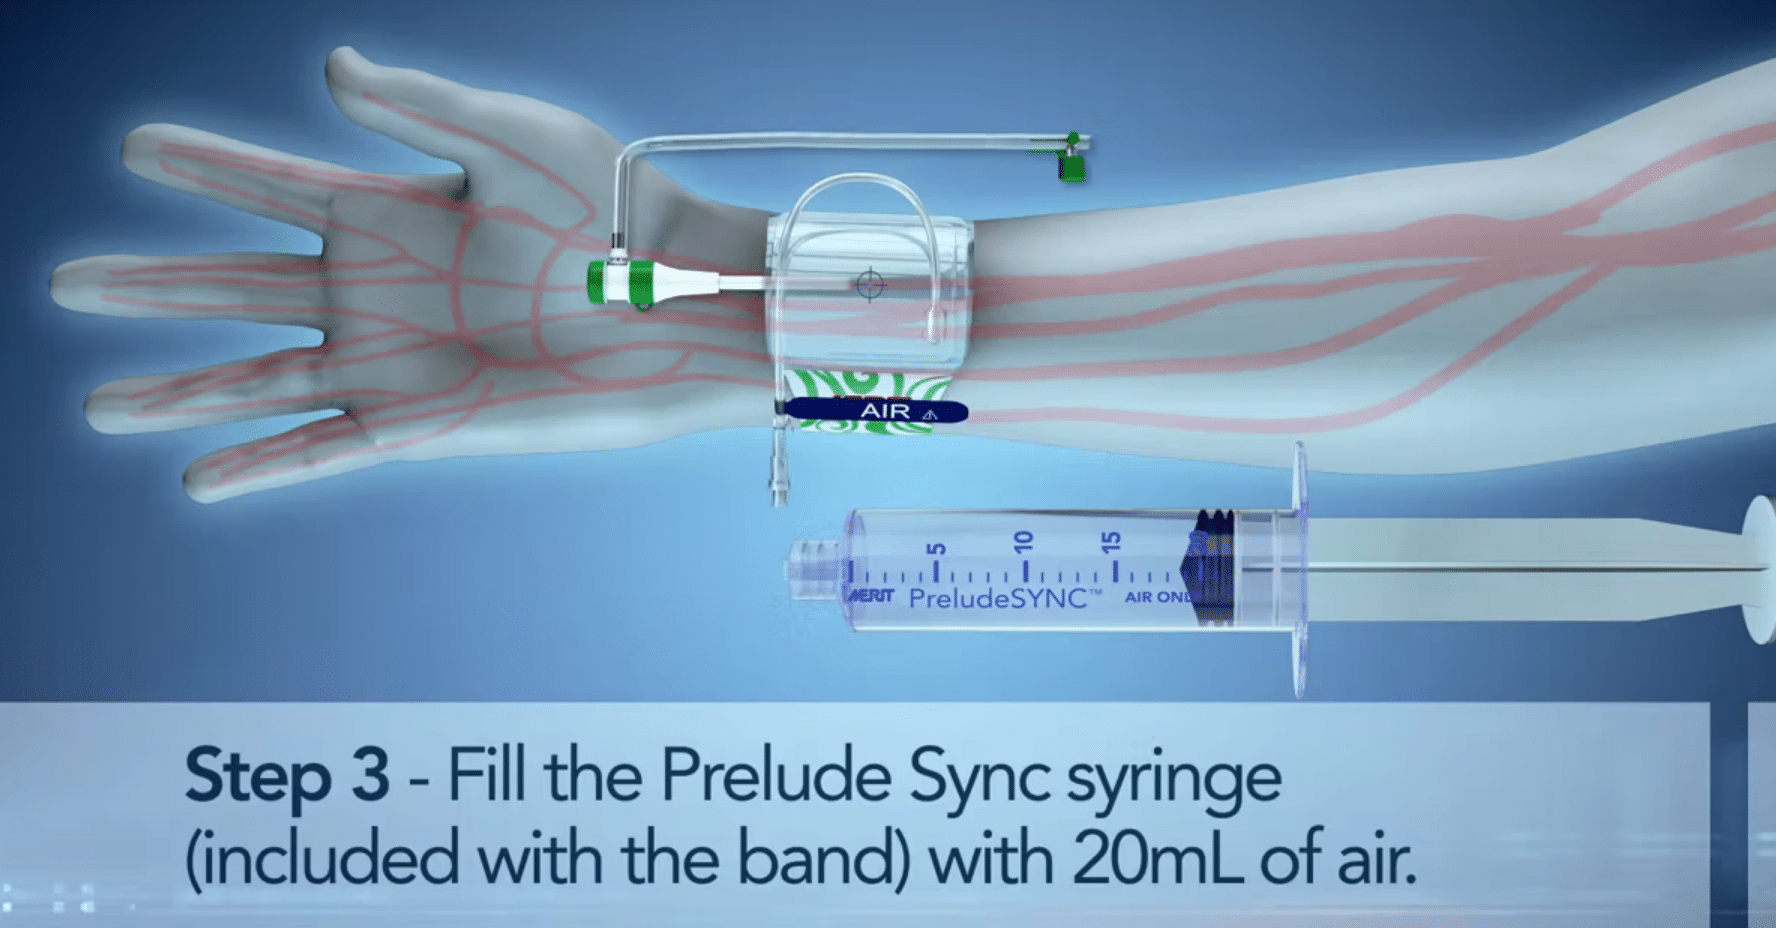 PreduleSync syringe with compression band